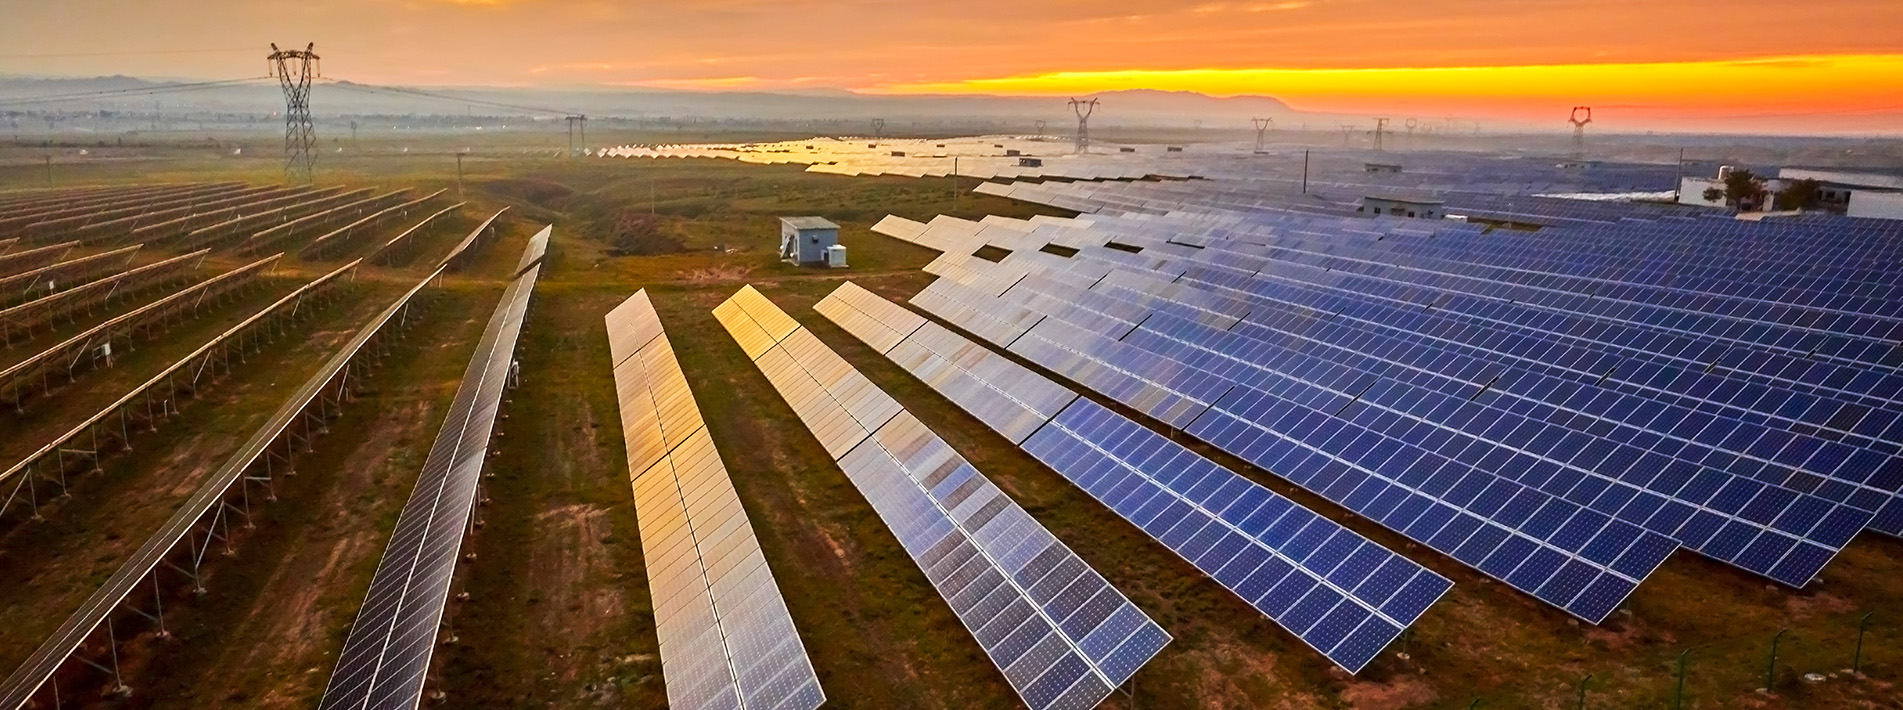 solar panel farms